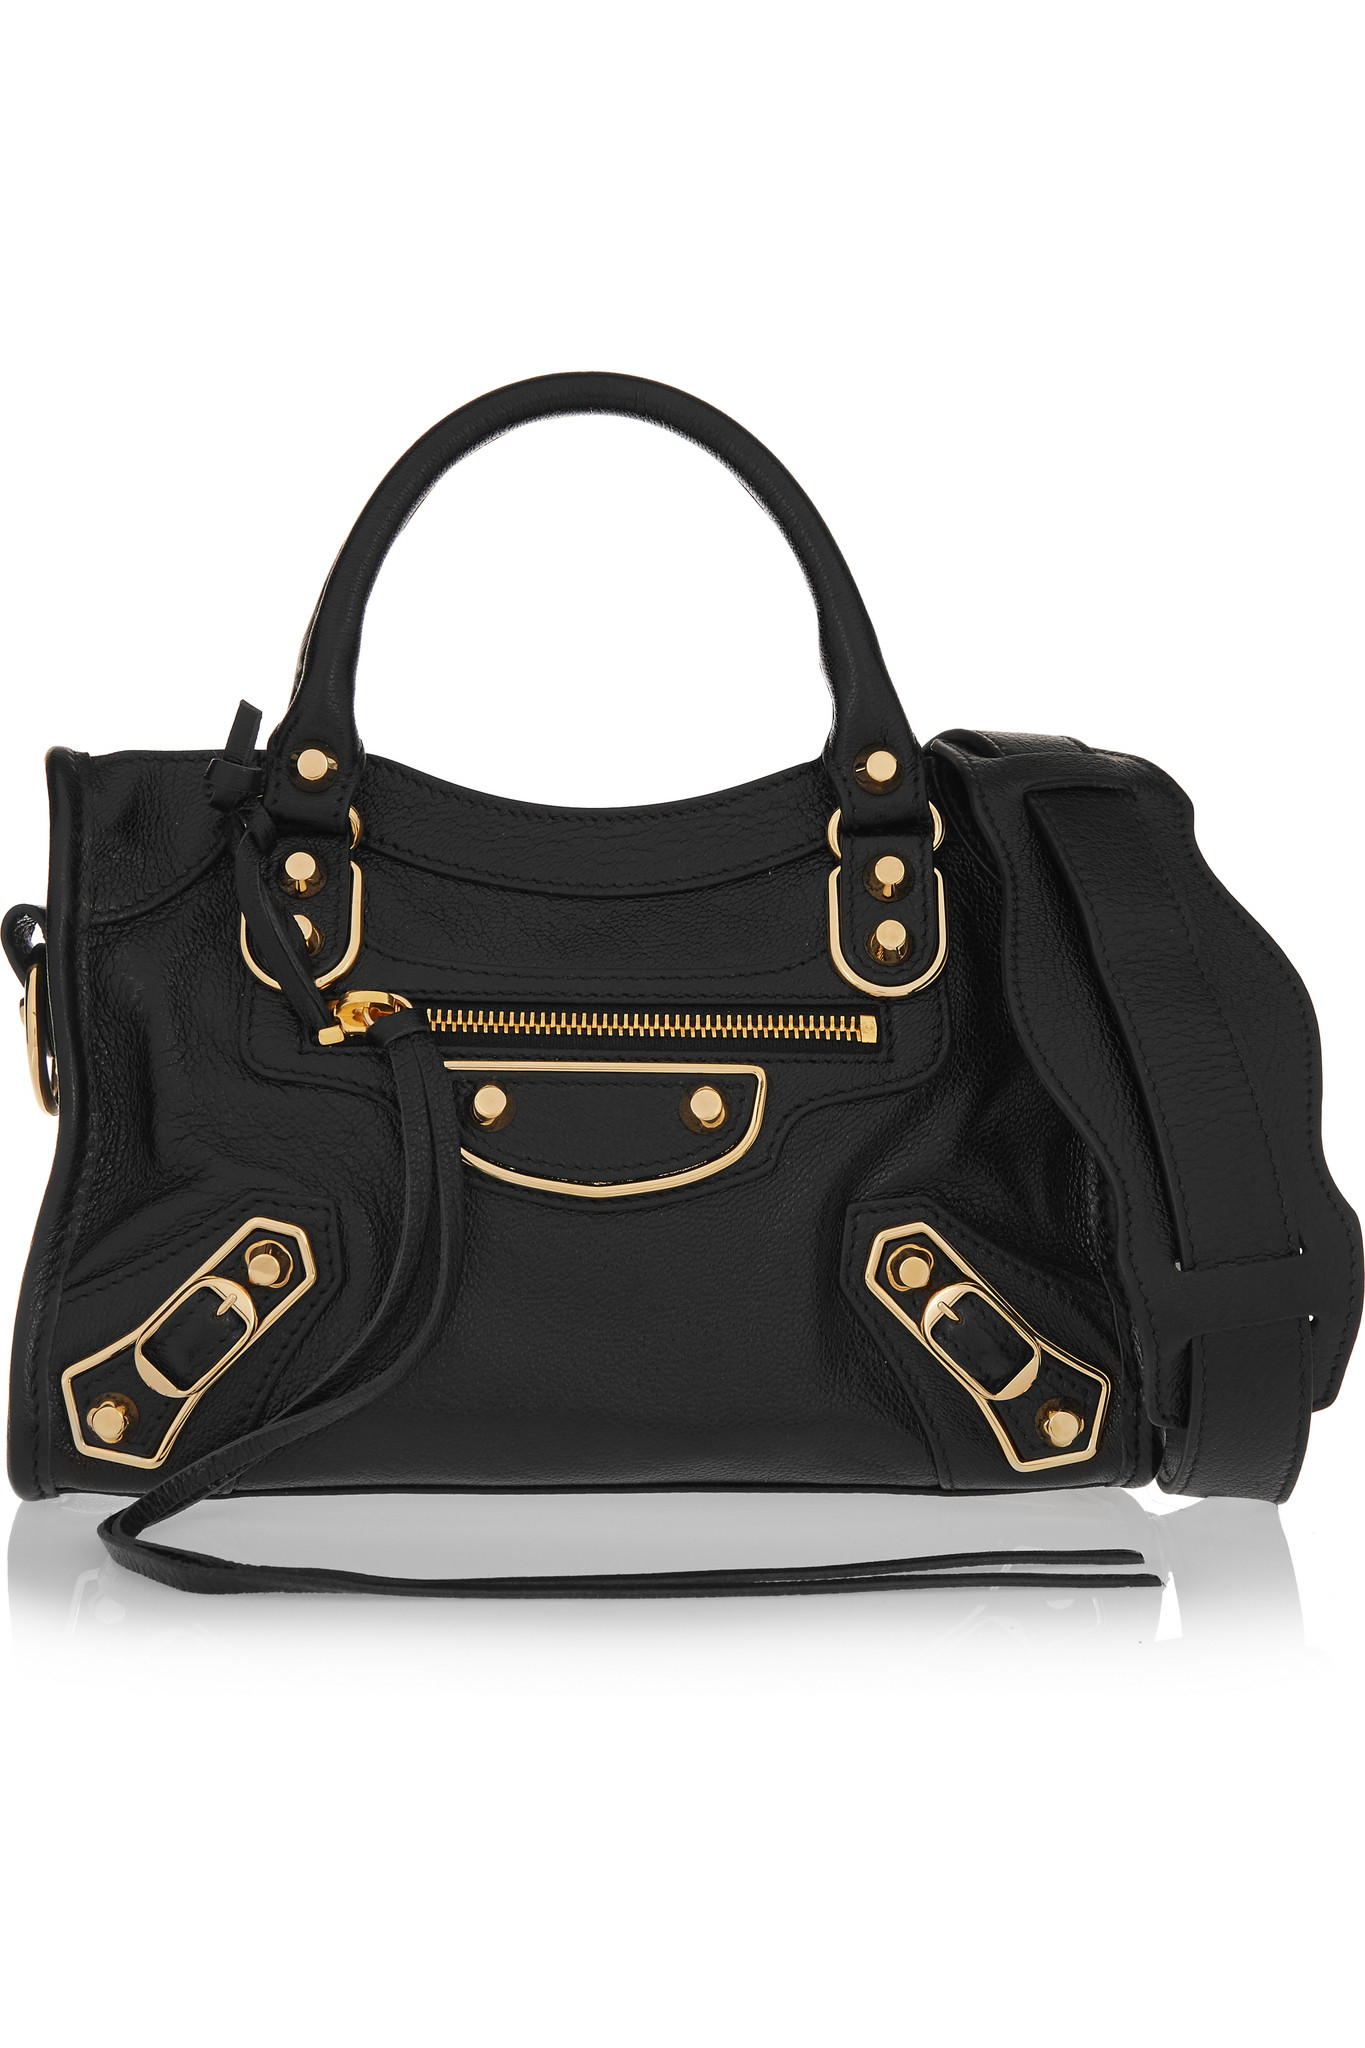 Balenciaga Classic Metallic Edge City Mini Textured-leather Shoulder Bag in Black - Lyst